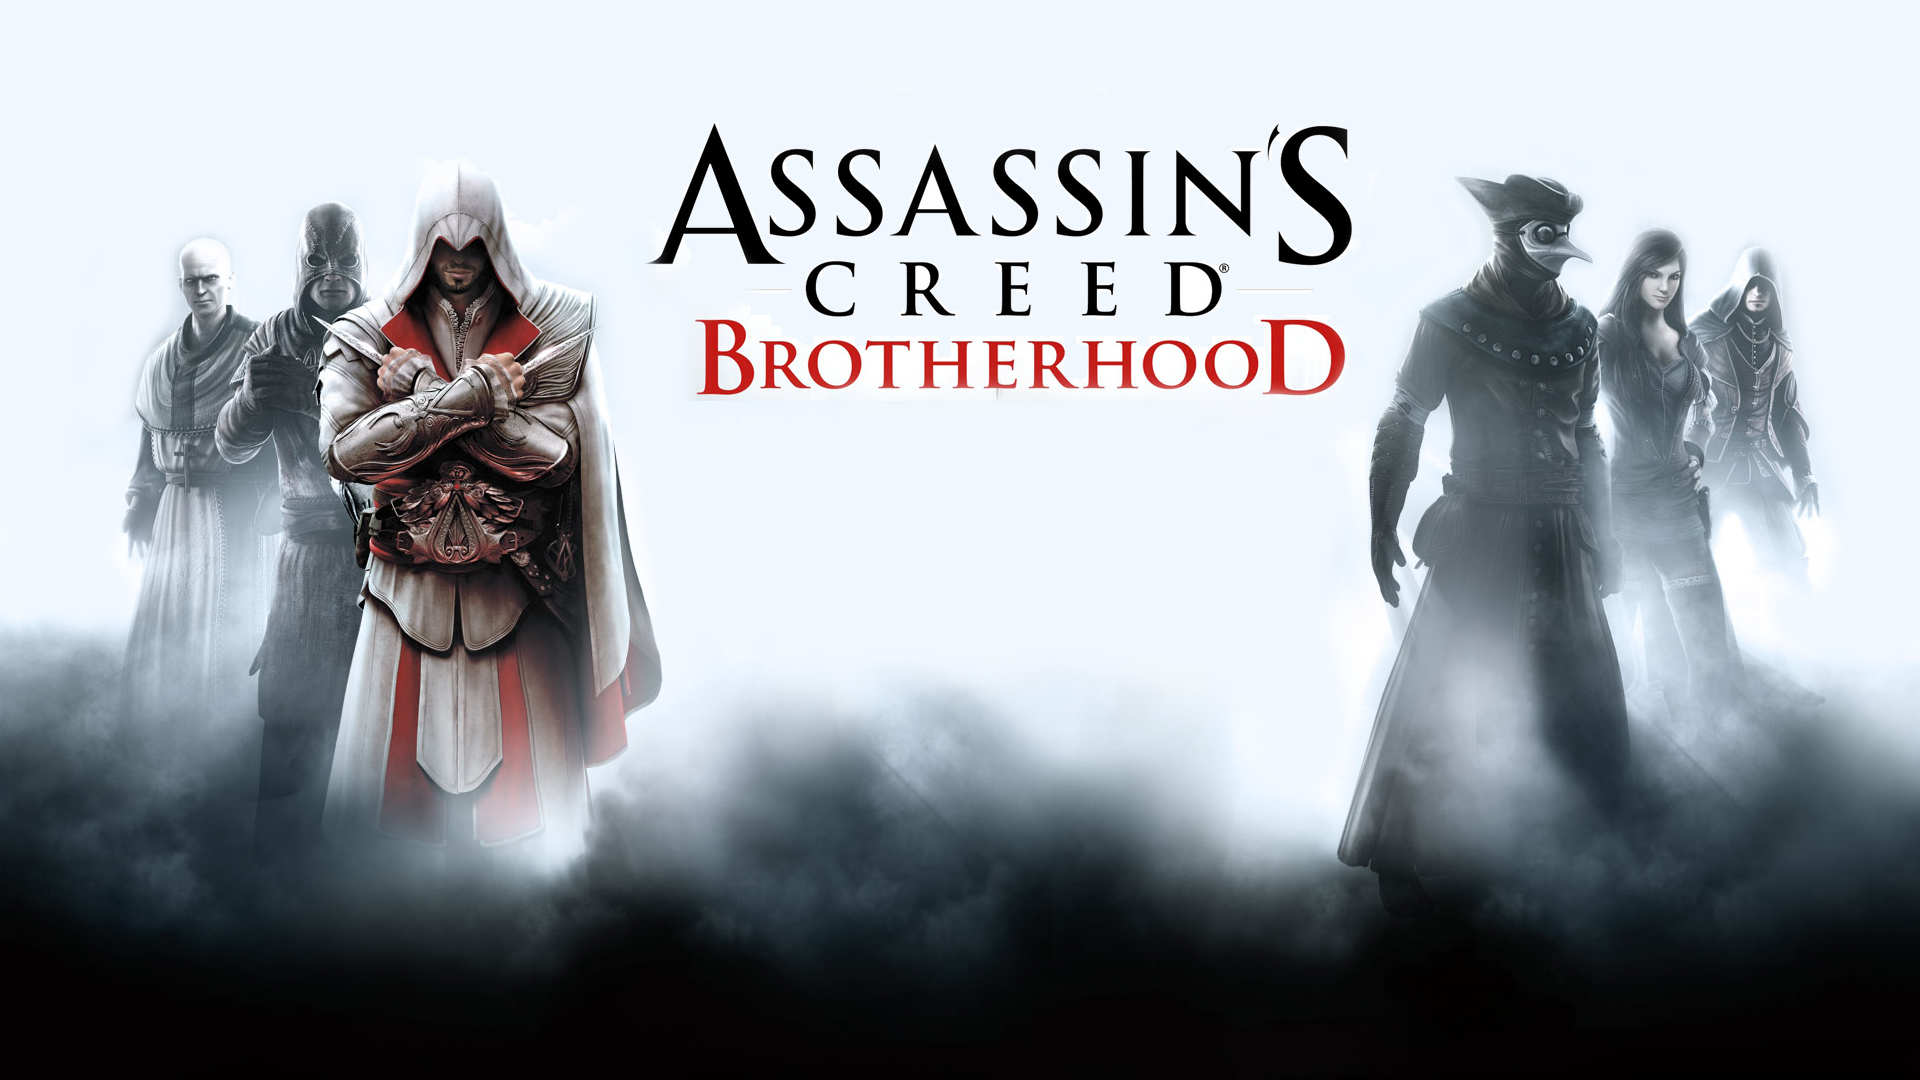 Assassins creed brotherhood на steam фото 1